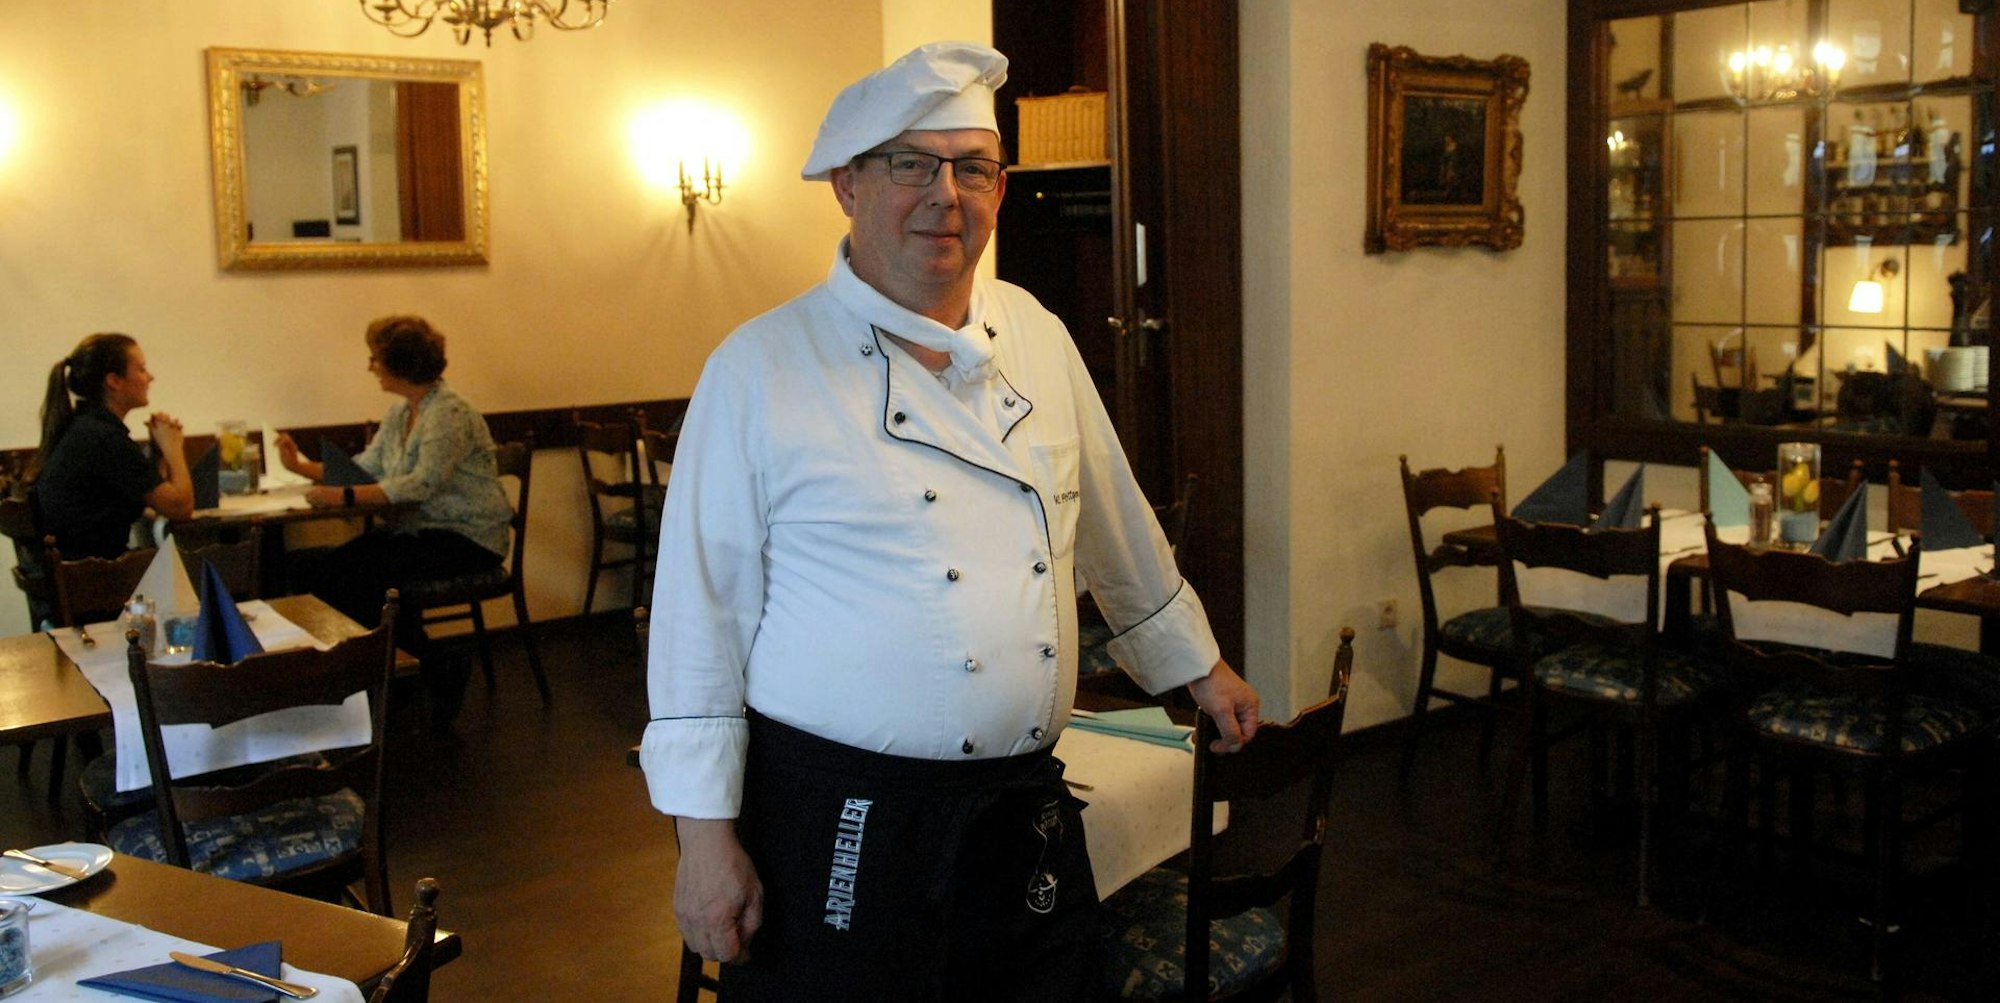 Hier kocht der Chef selbst: Wolfgang Pöttgen führt den Betrieb seit 1996.